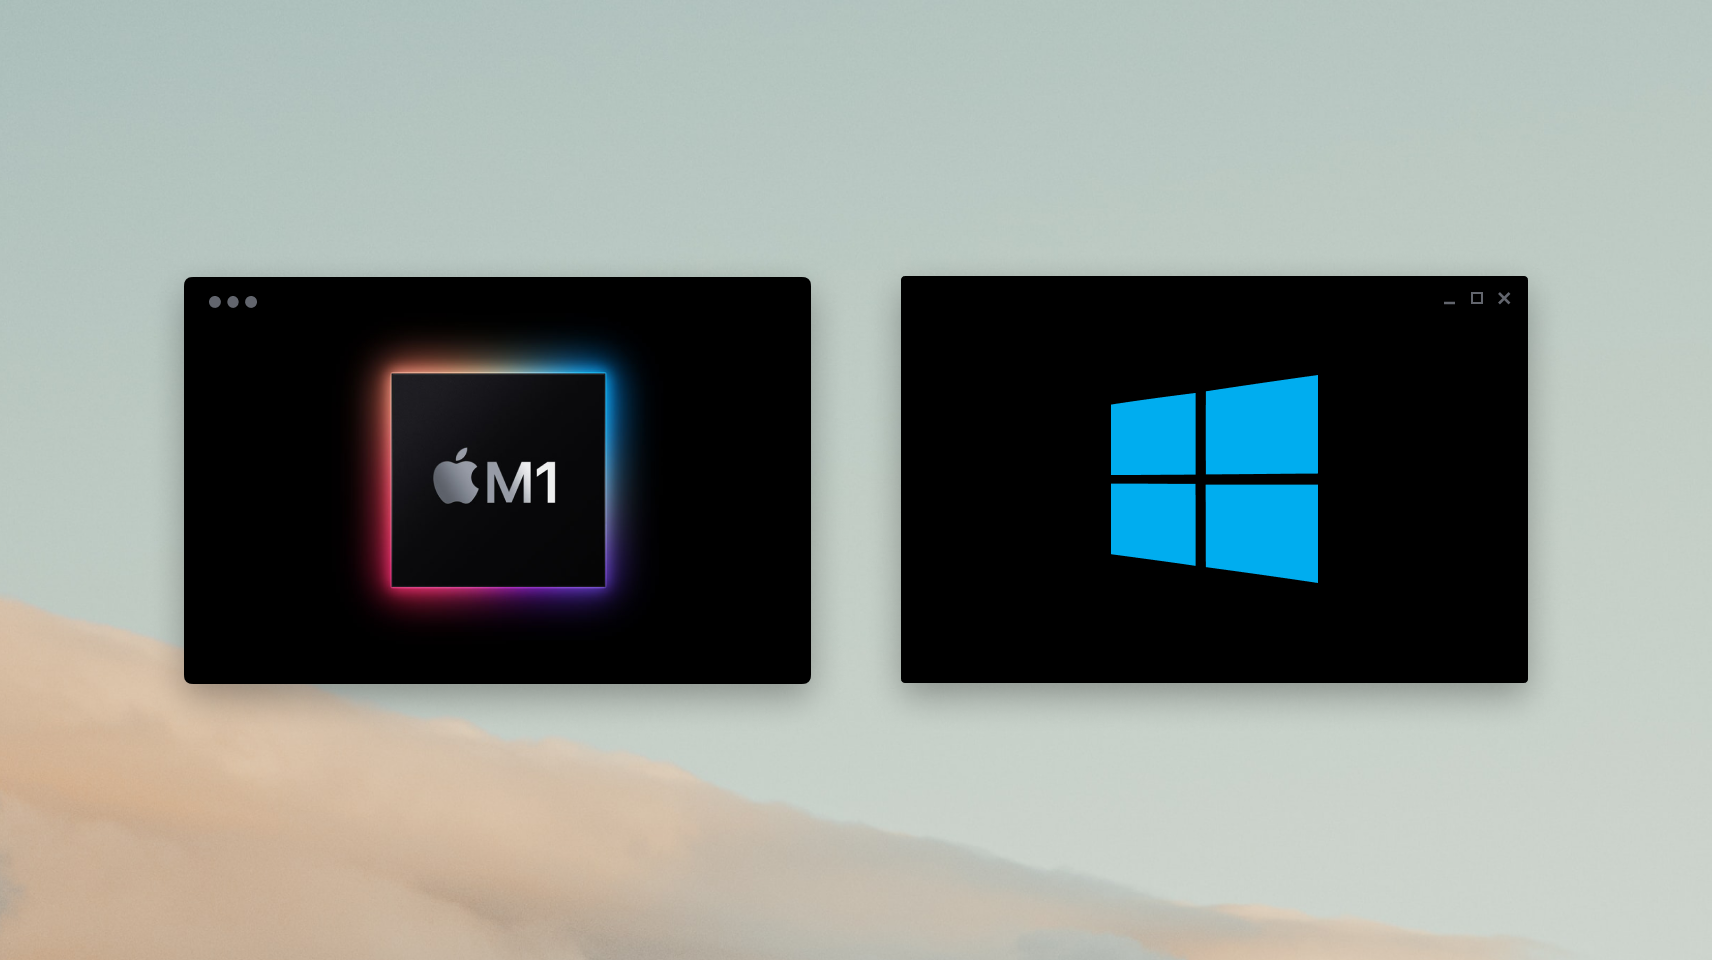 vmware windows m1